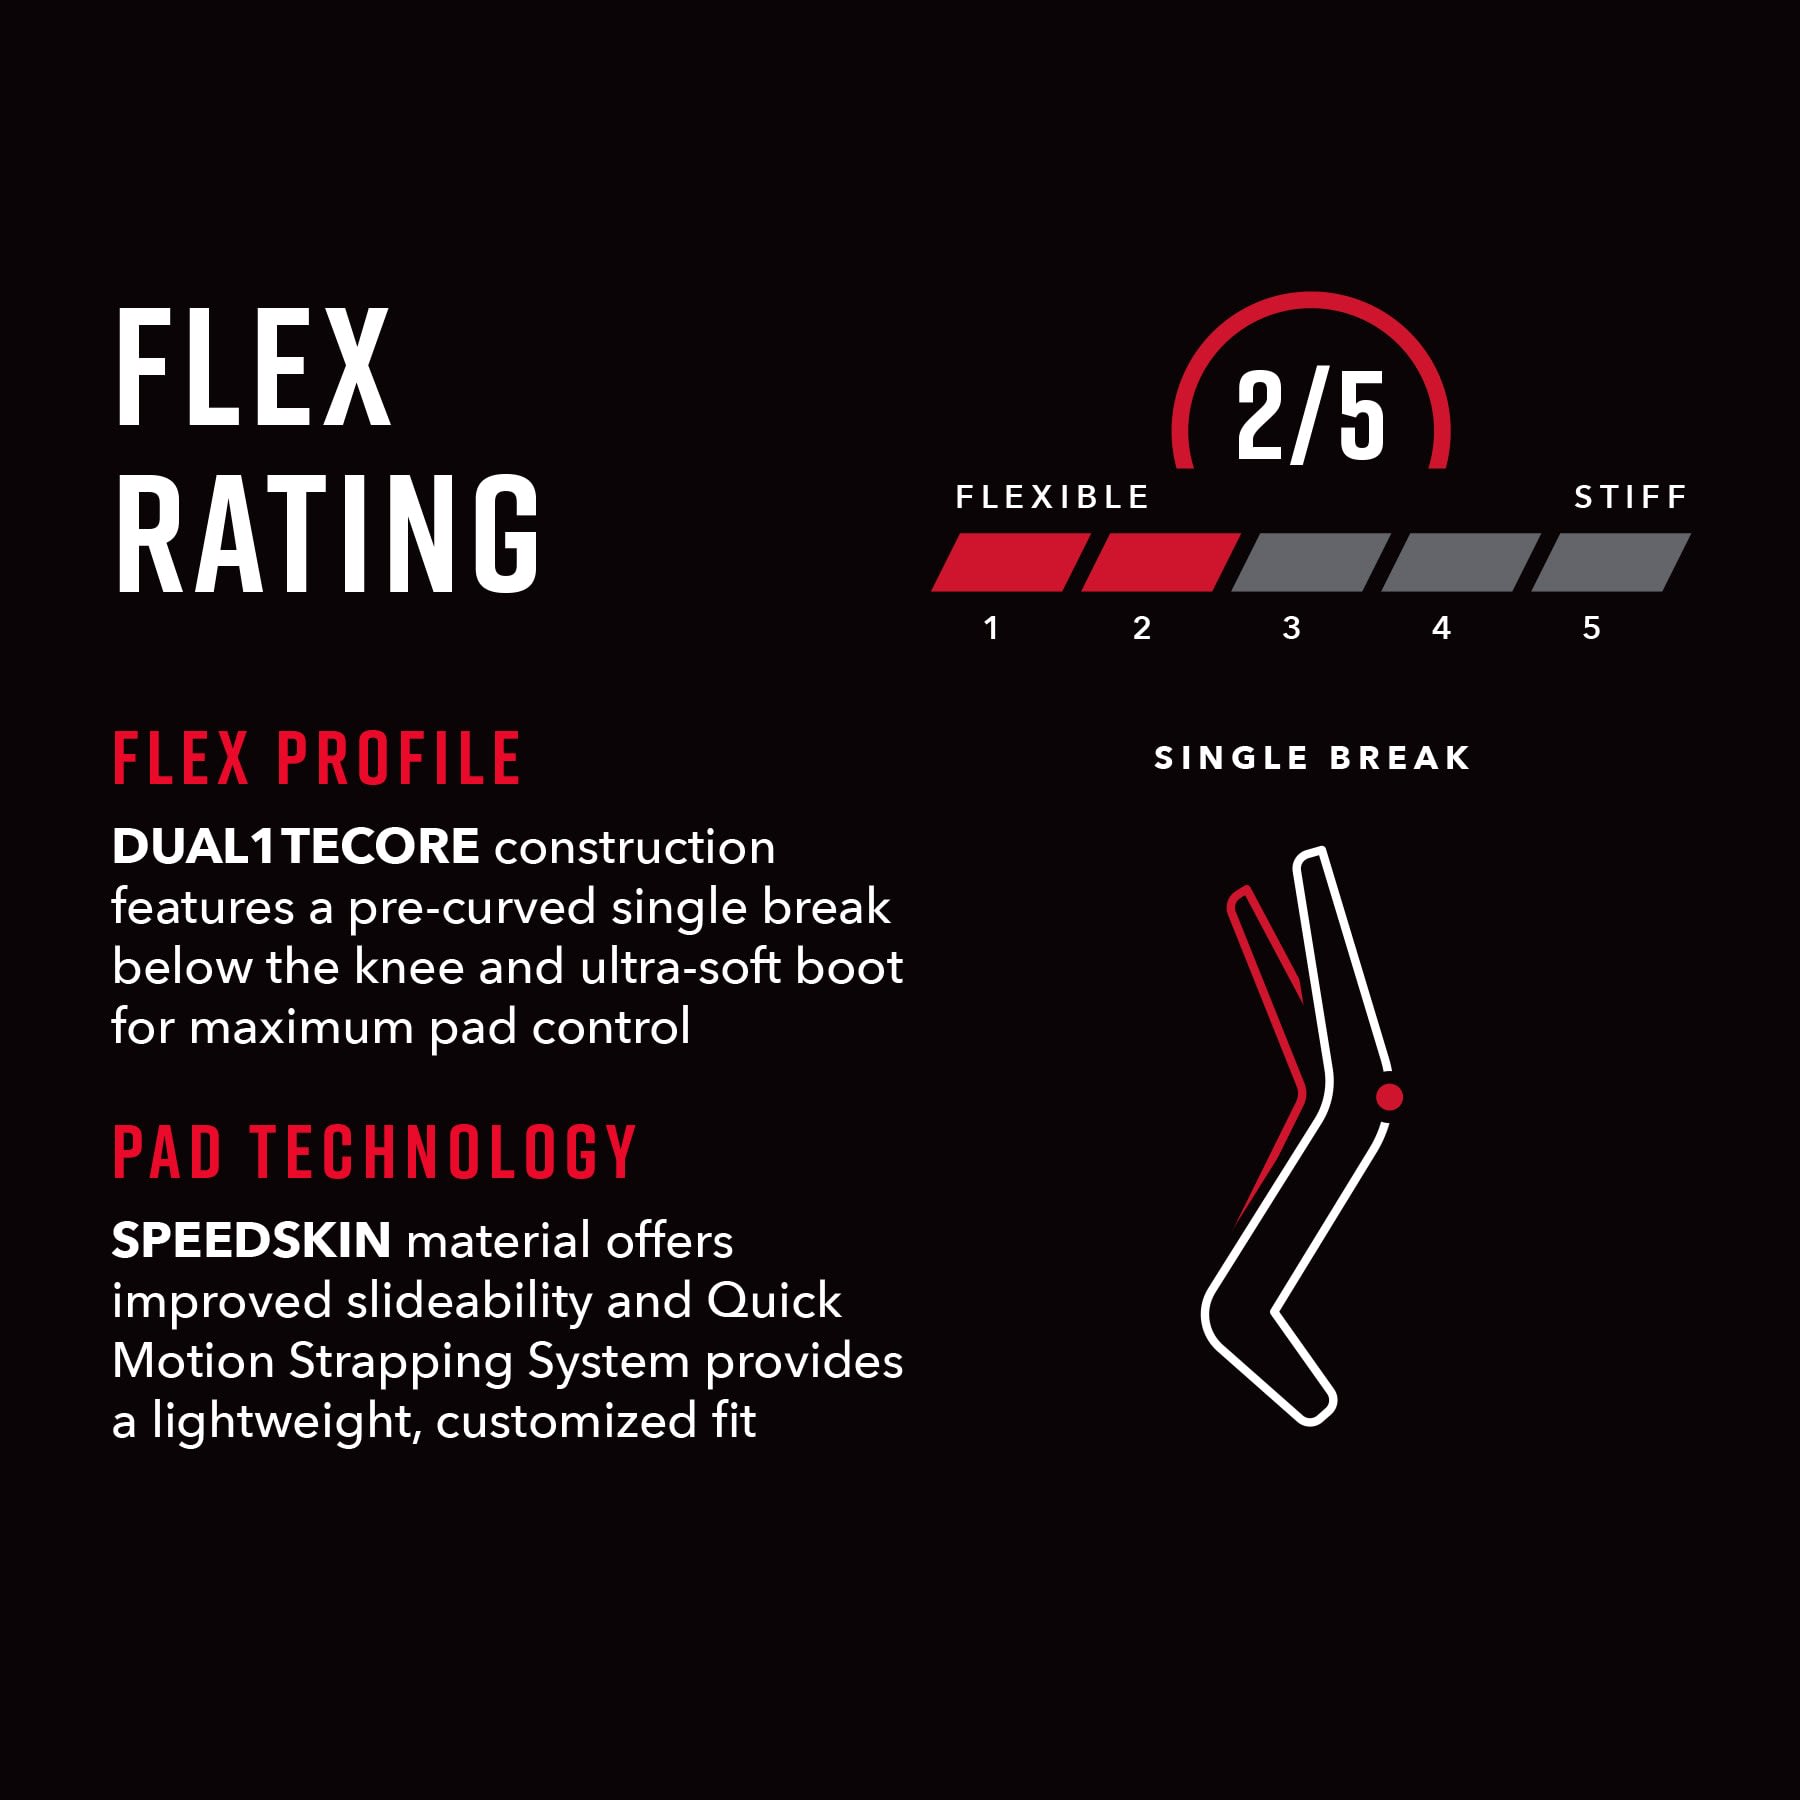 CCM Eflex Leg Pad Flex Profile Characteristics - Infographic